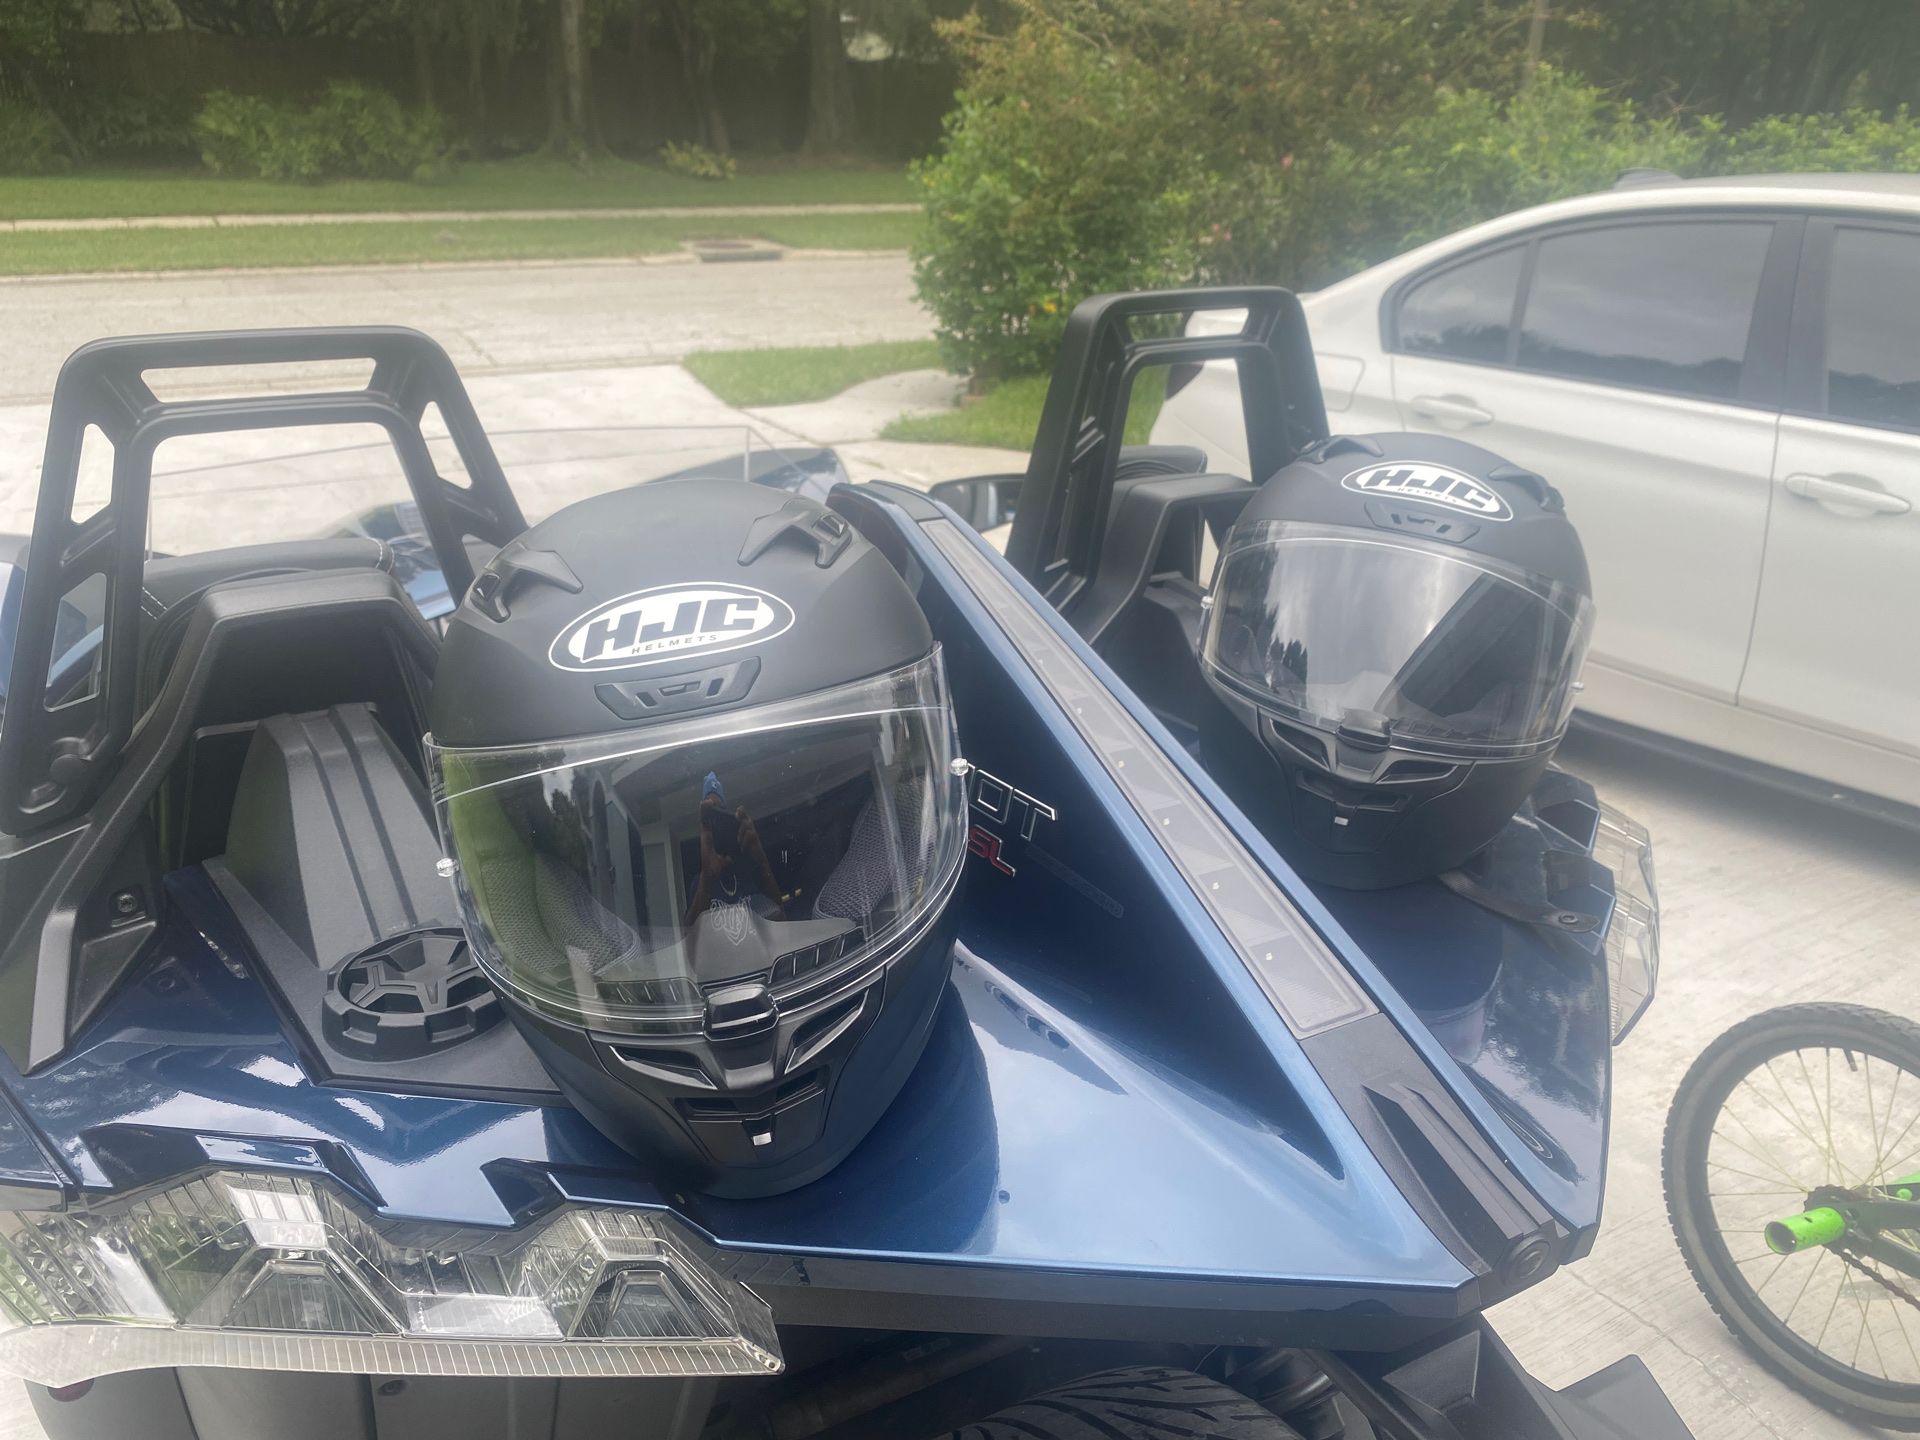 2 HJC motorcycle helmets